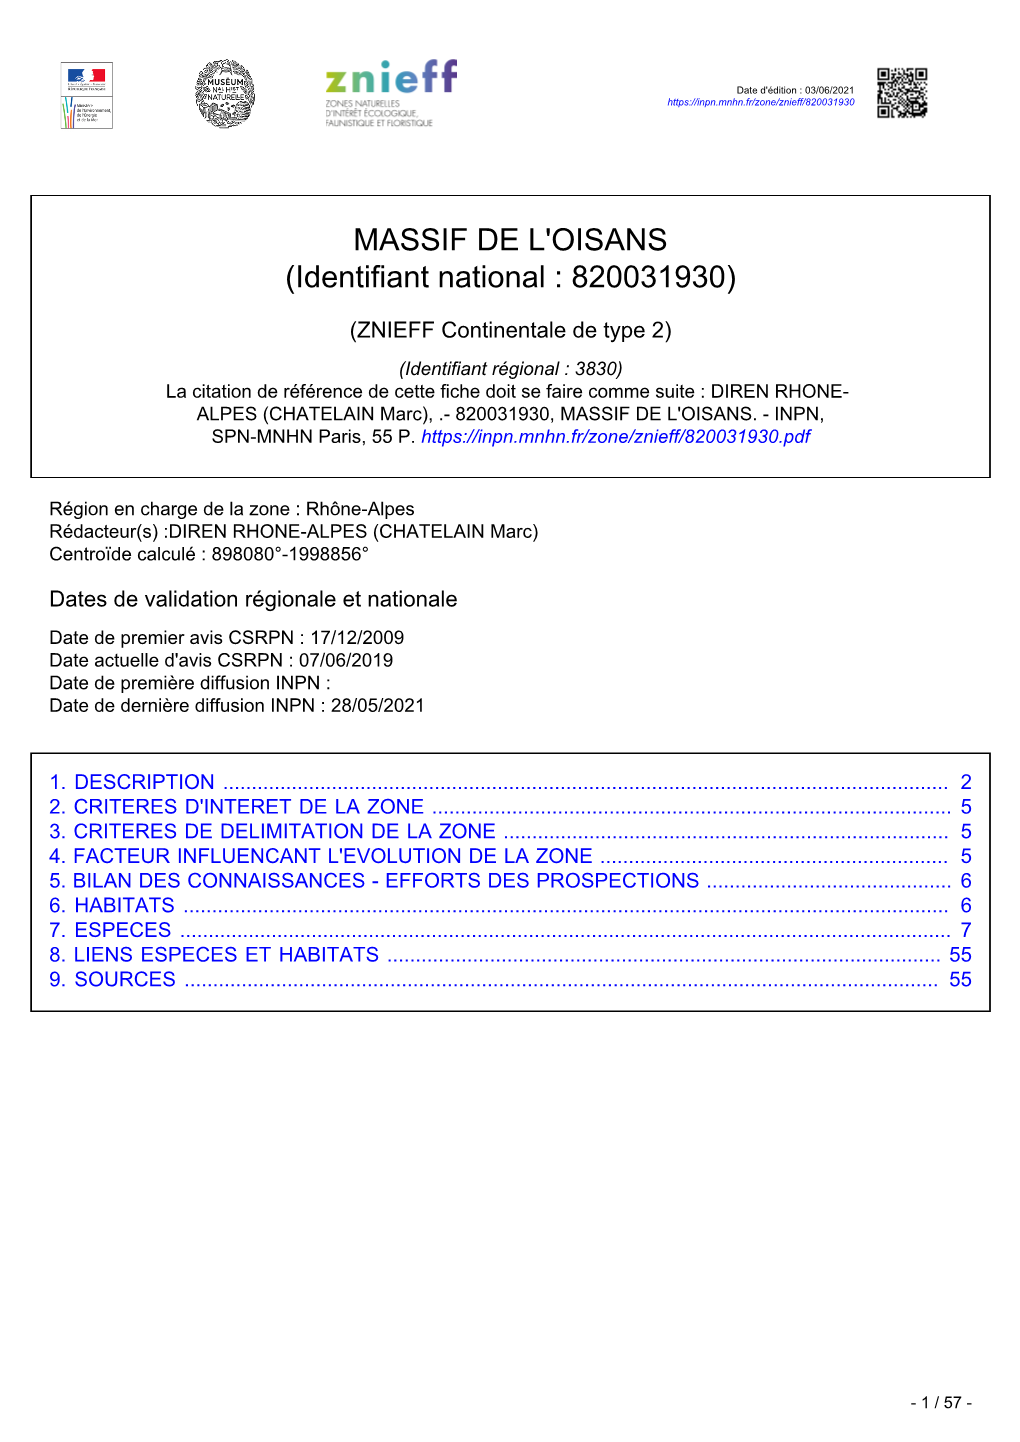 MASSIF DE L'oisans (Identifiant National : 820031930)